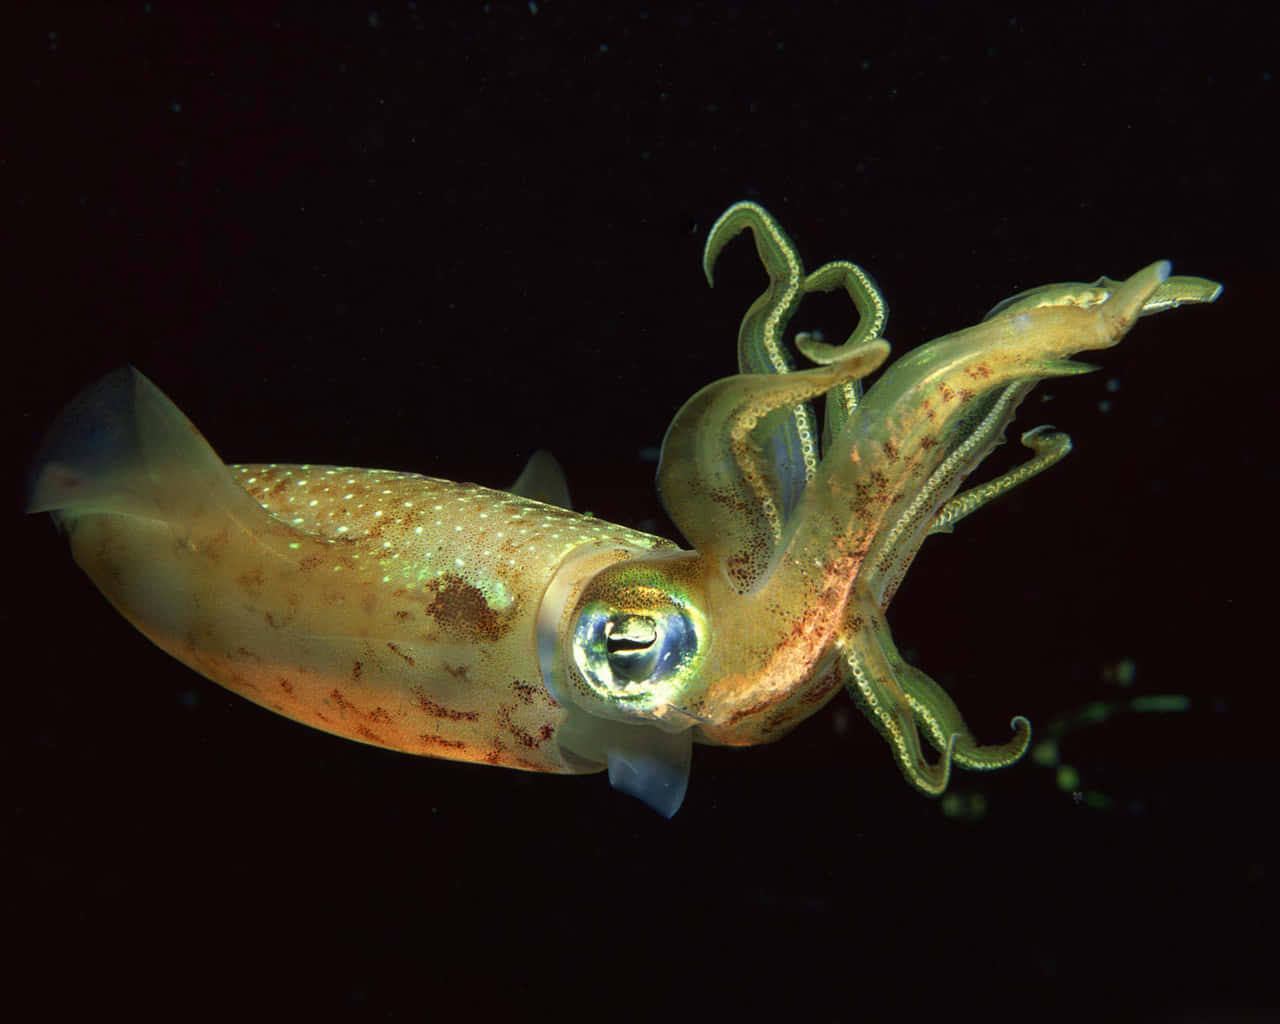 "A Giant Squid Lurking Under the Ocean"